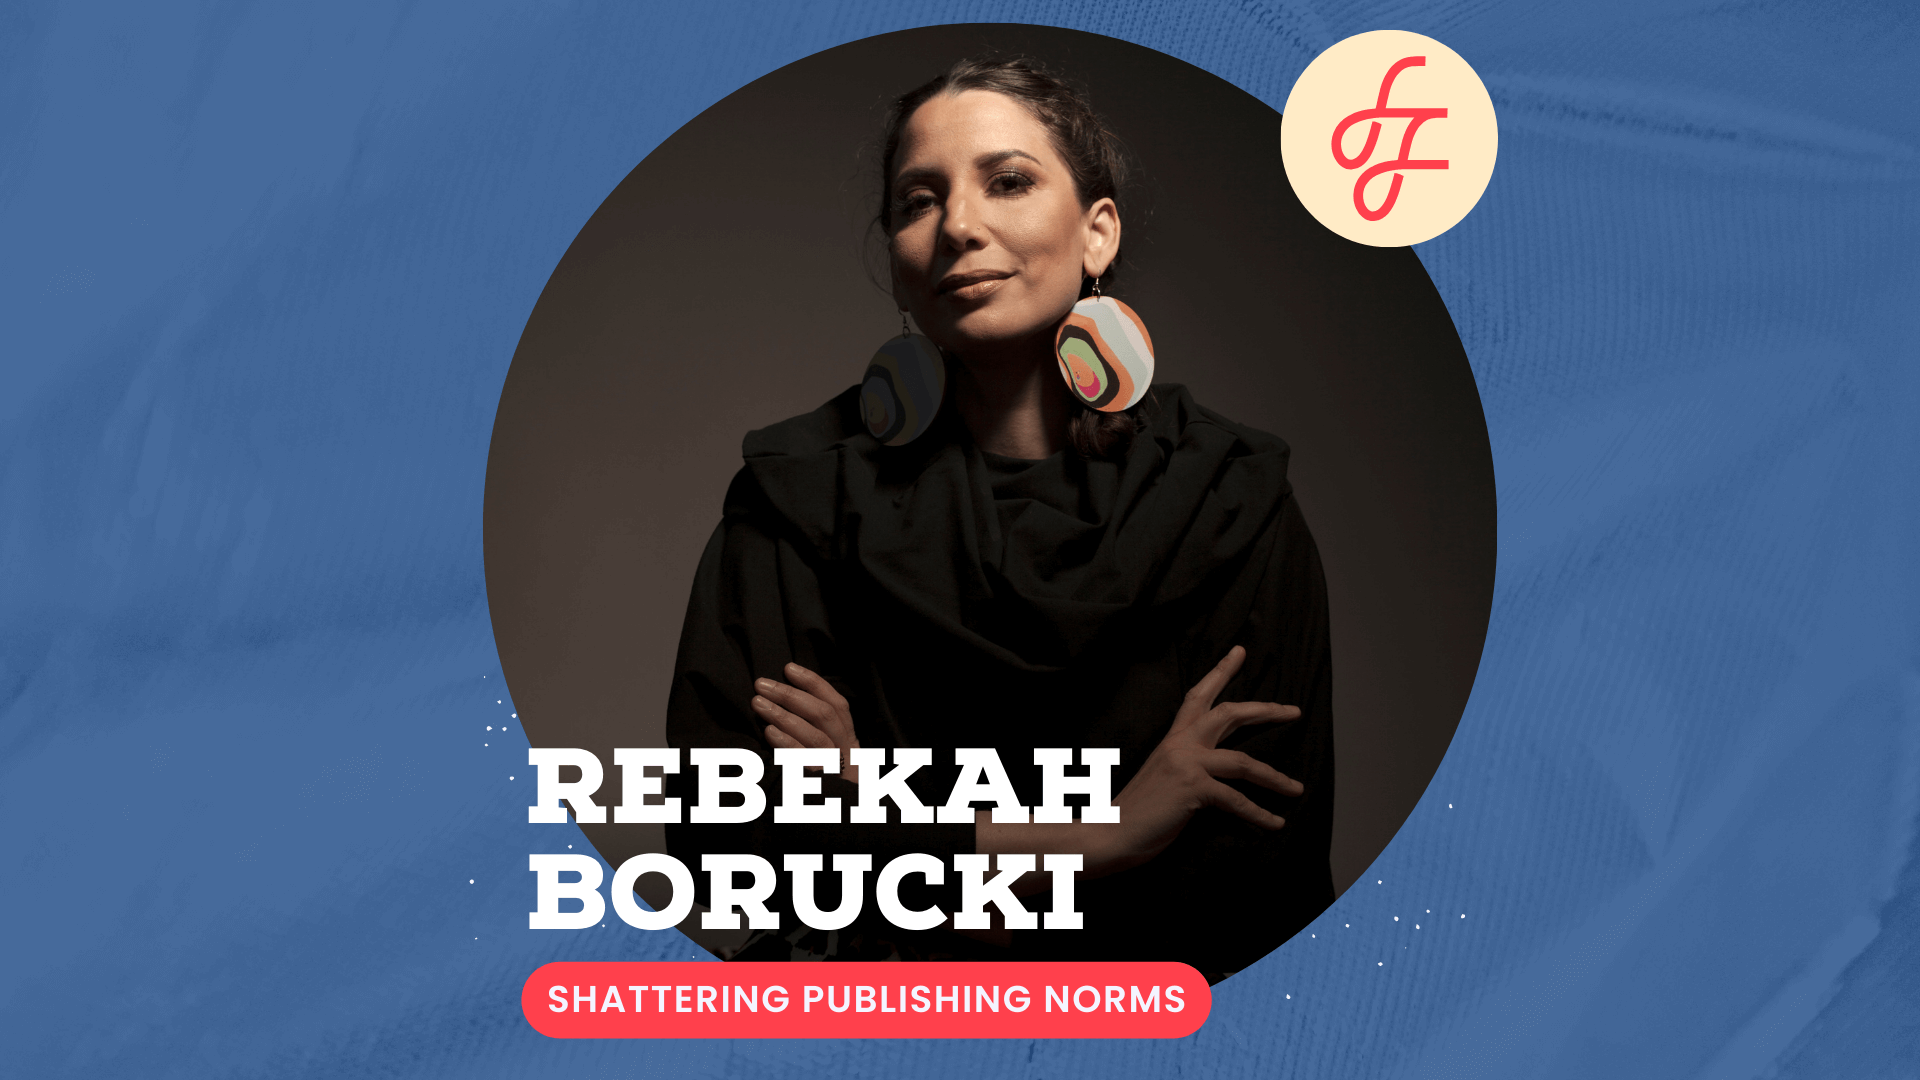 Shattering Publishing Norms with Rebekah Borucki